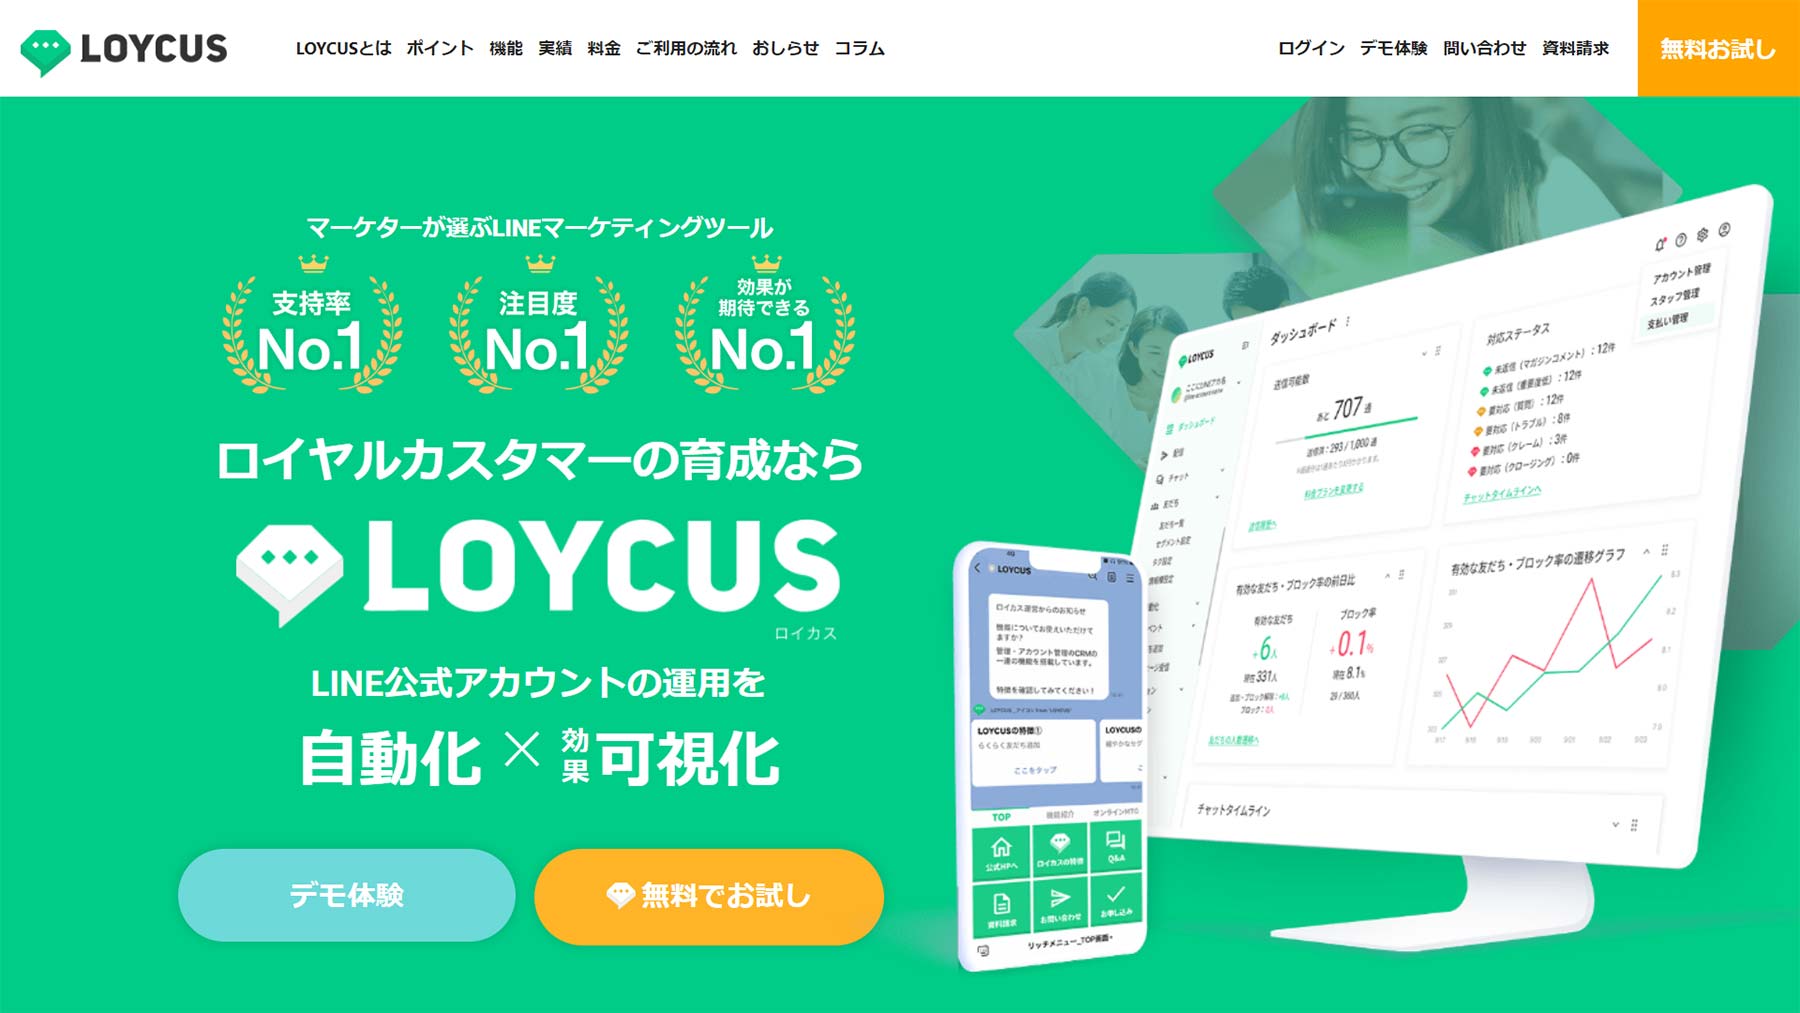 LOYCUS公式Webサイト